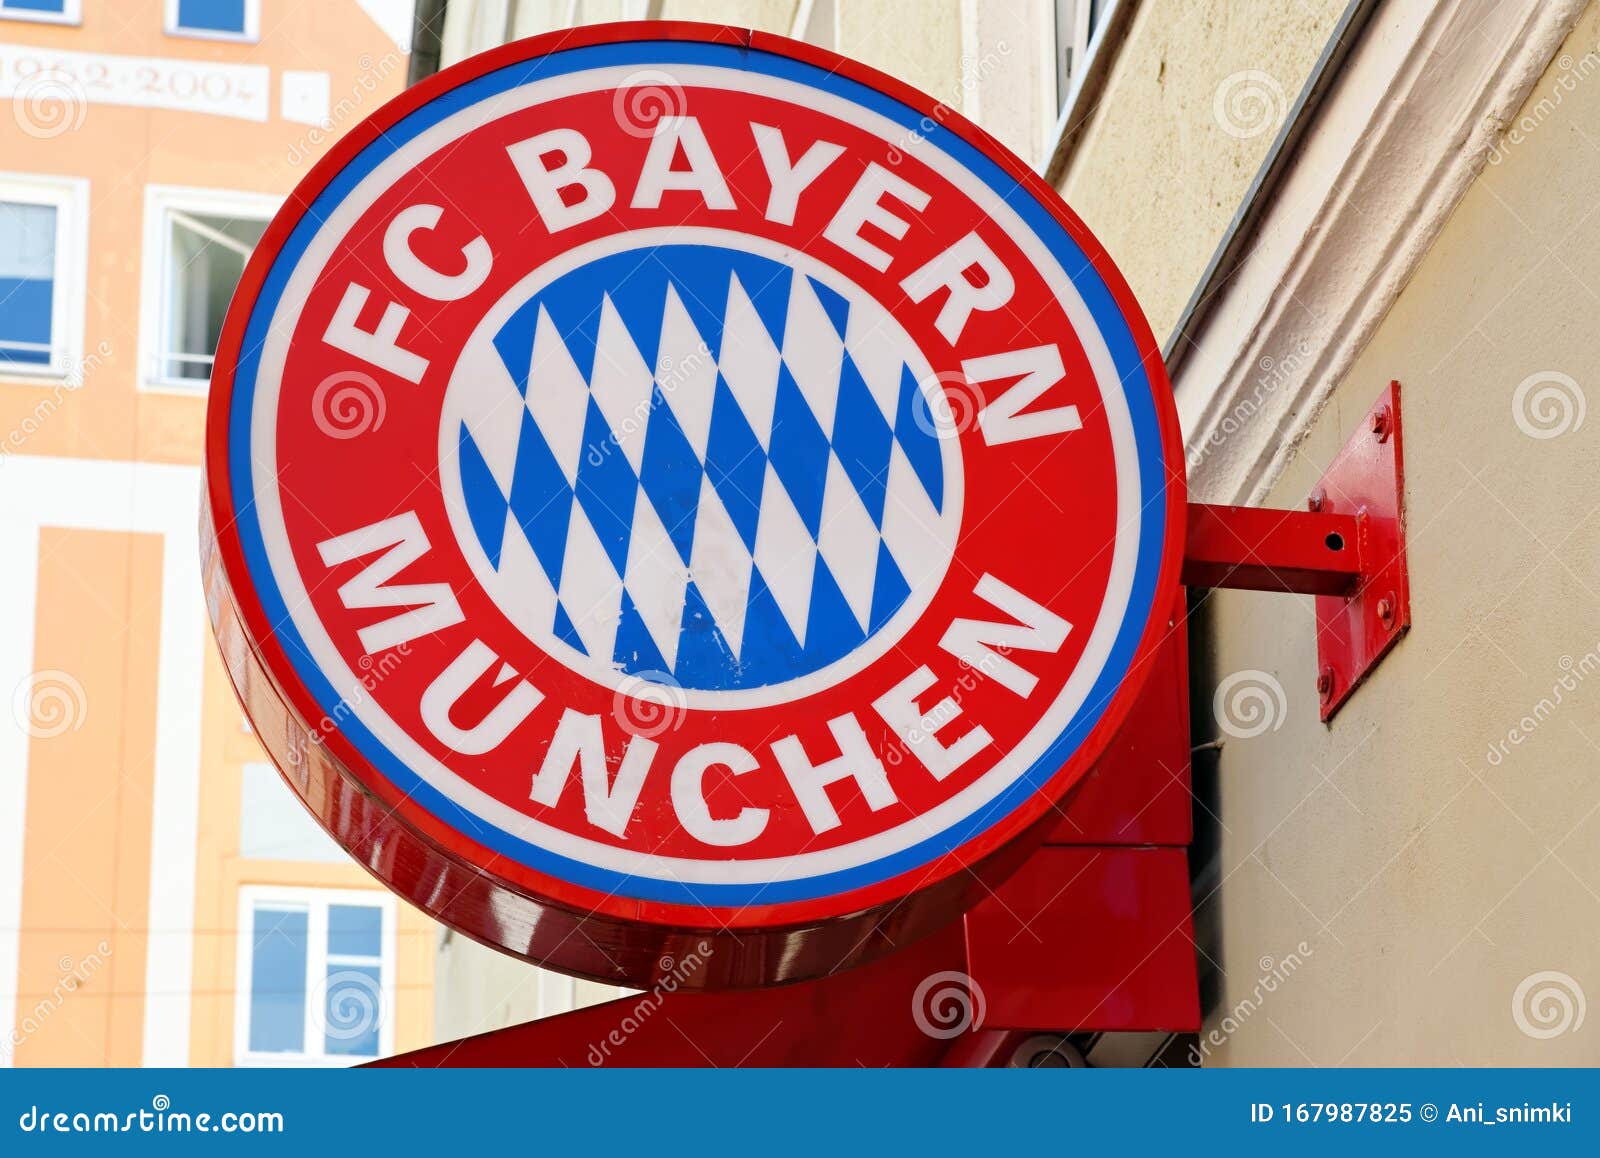 Bayern Munich Club Logo, Munich, Germany Editorial Image ...